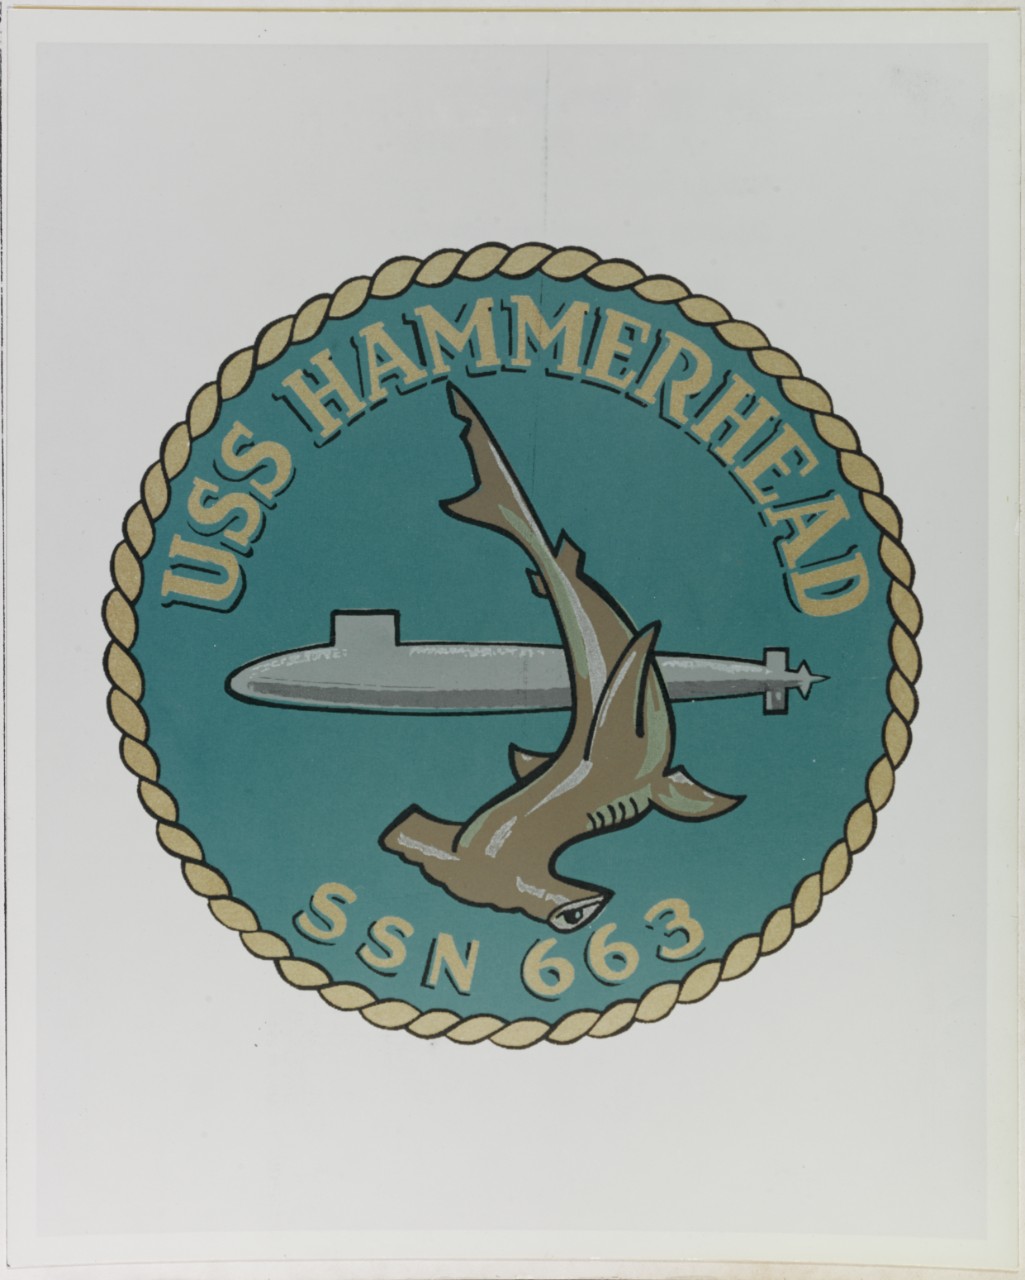 Insignia: USS HAMMERHEAD (SSN-663)